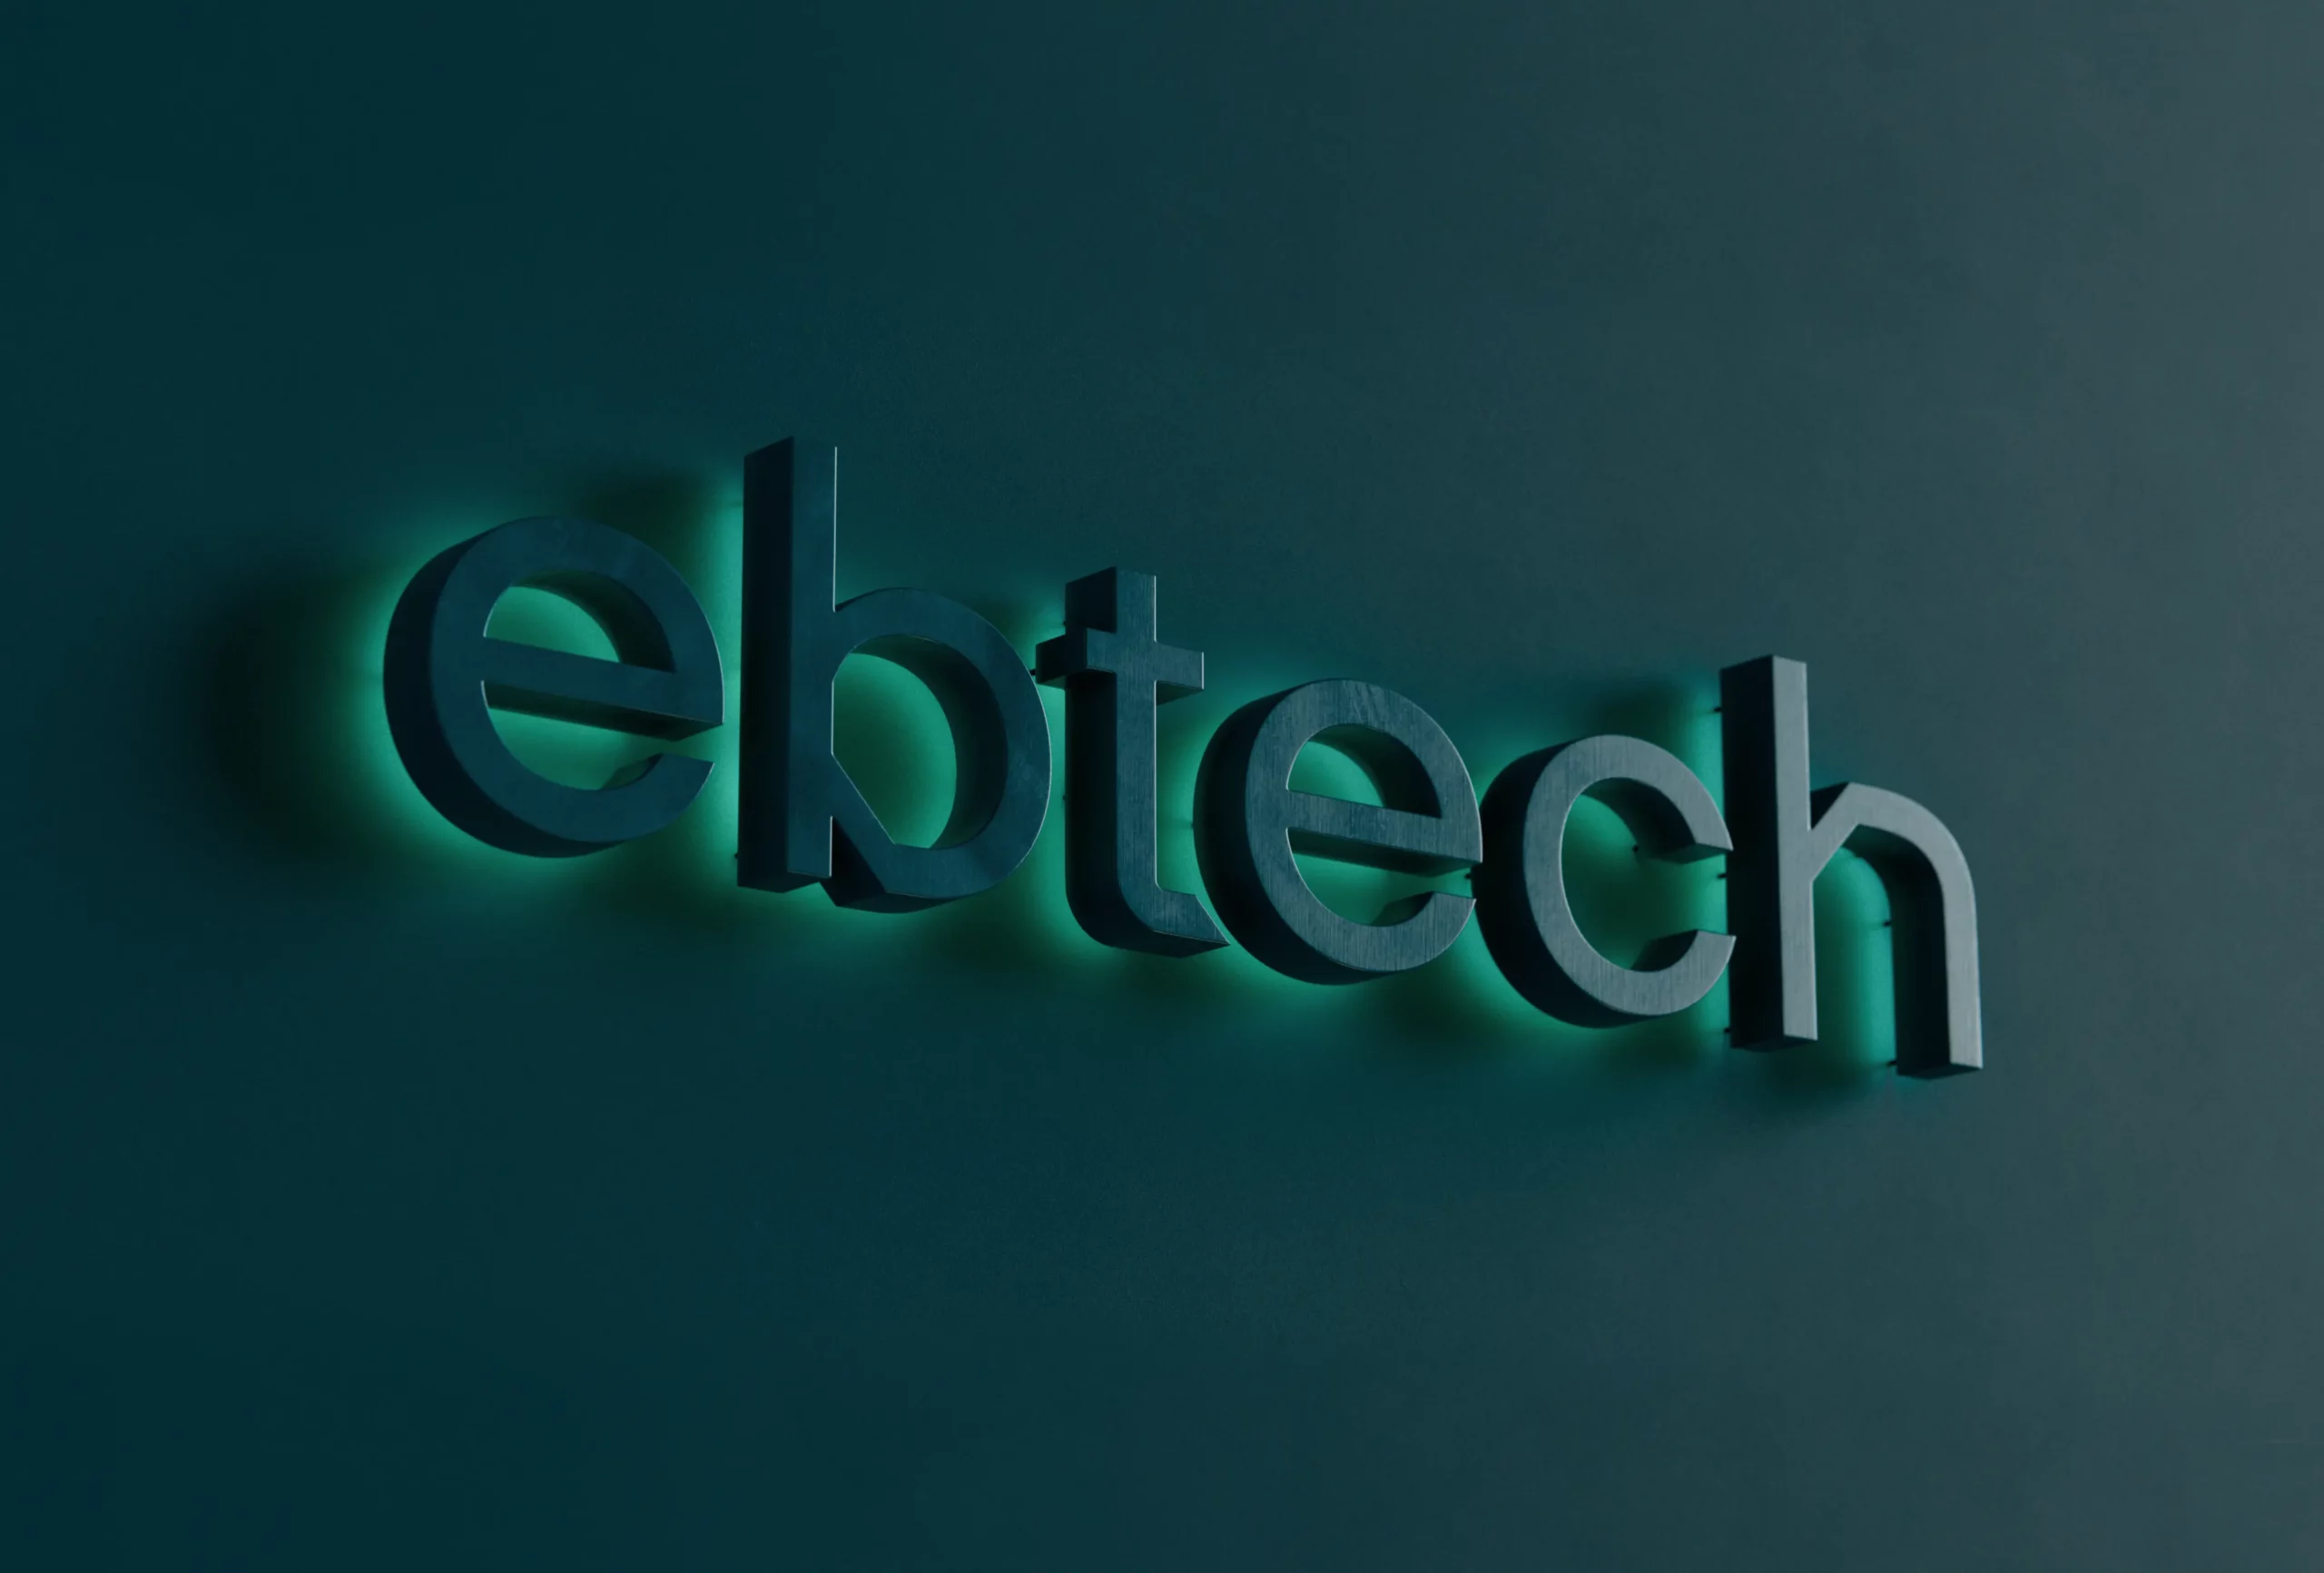 Ebtech Brand Identity Backlit Signage - Ten Fathoms